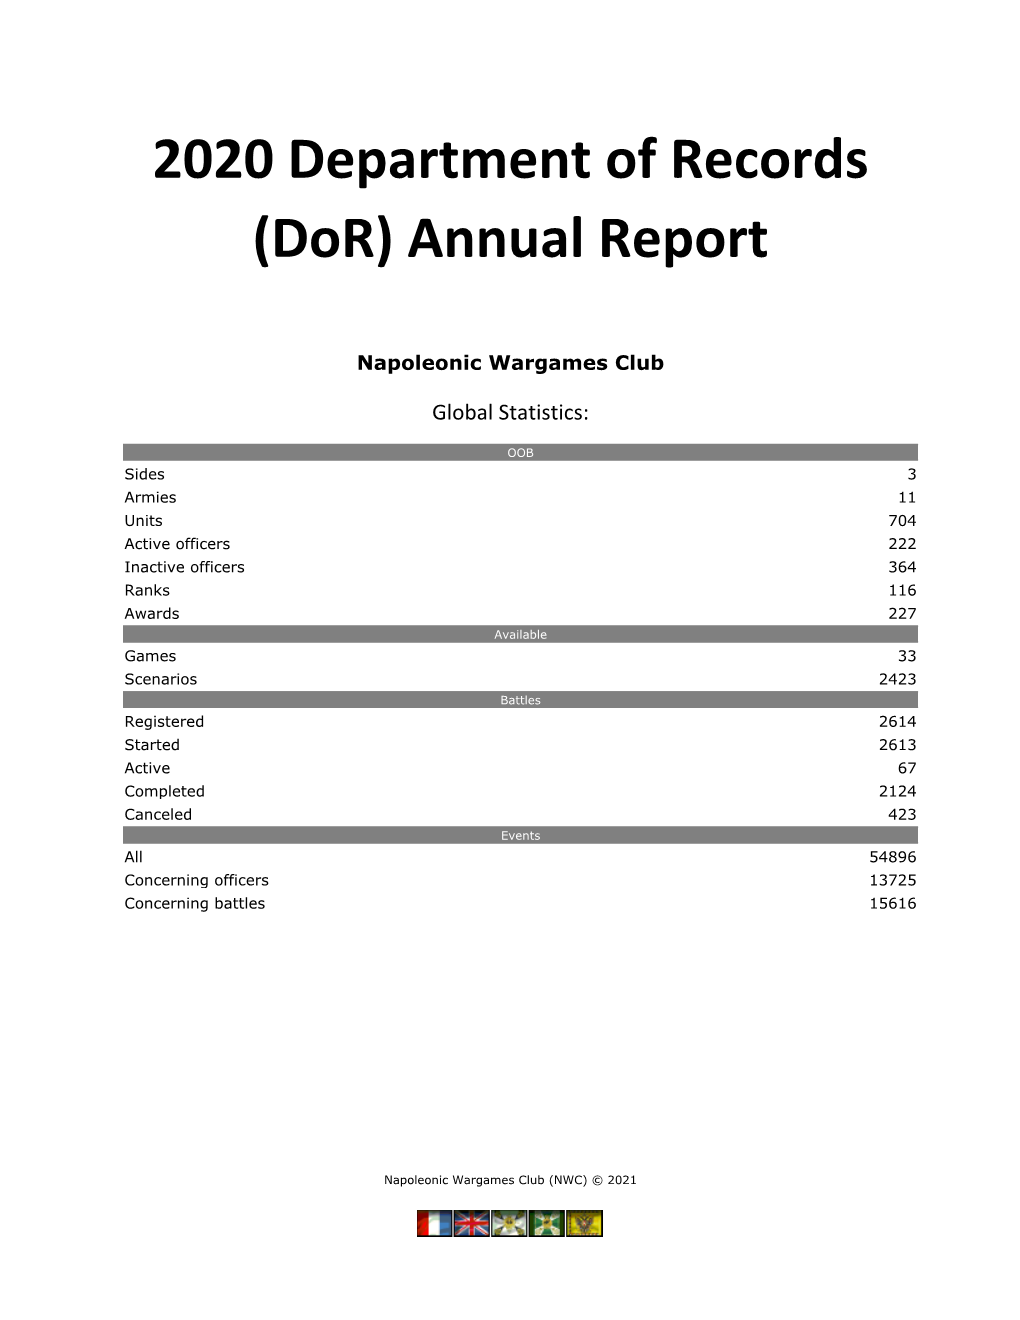 2020 Department of Records (Dor) Annual Report